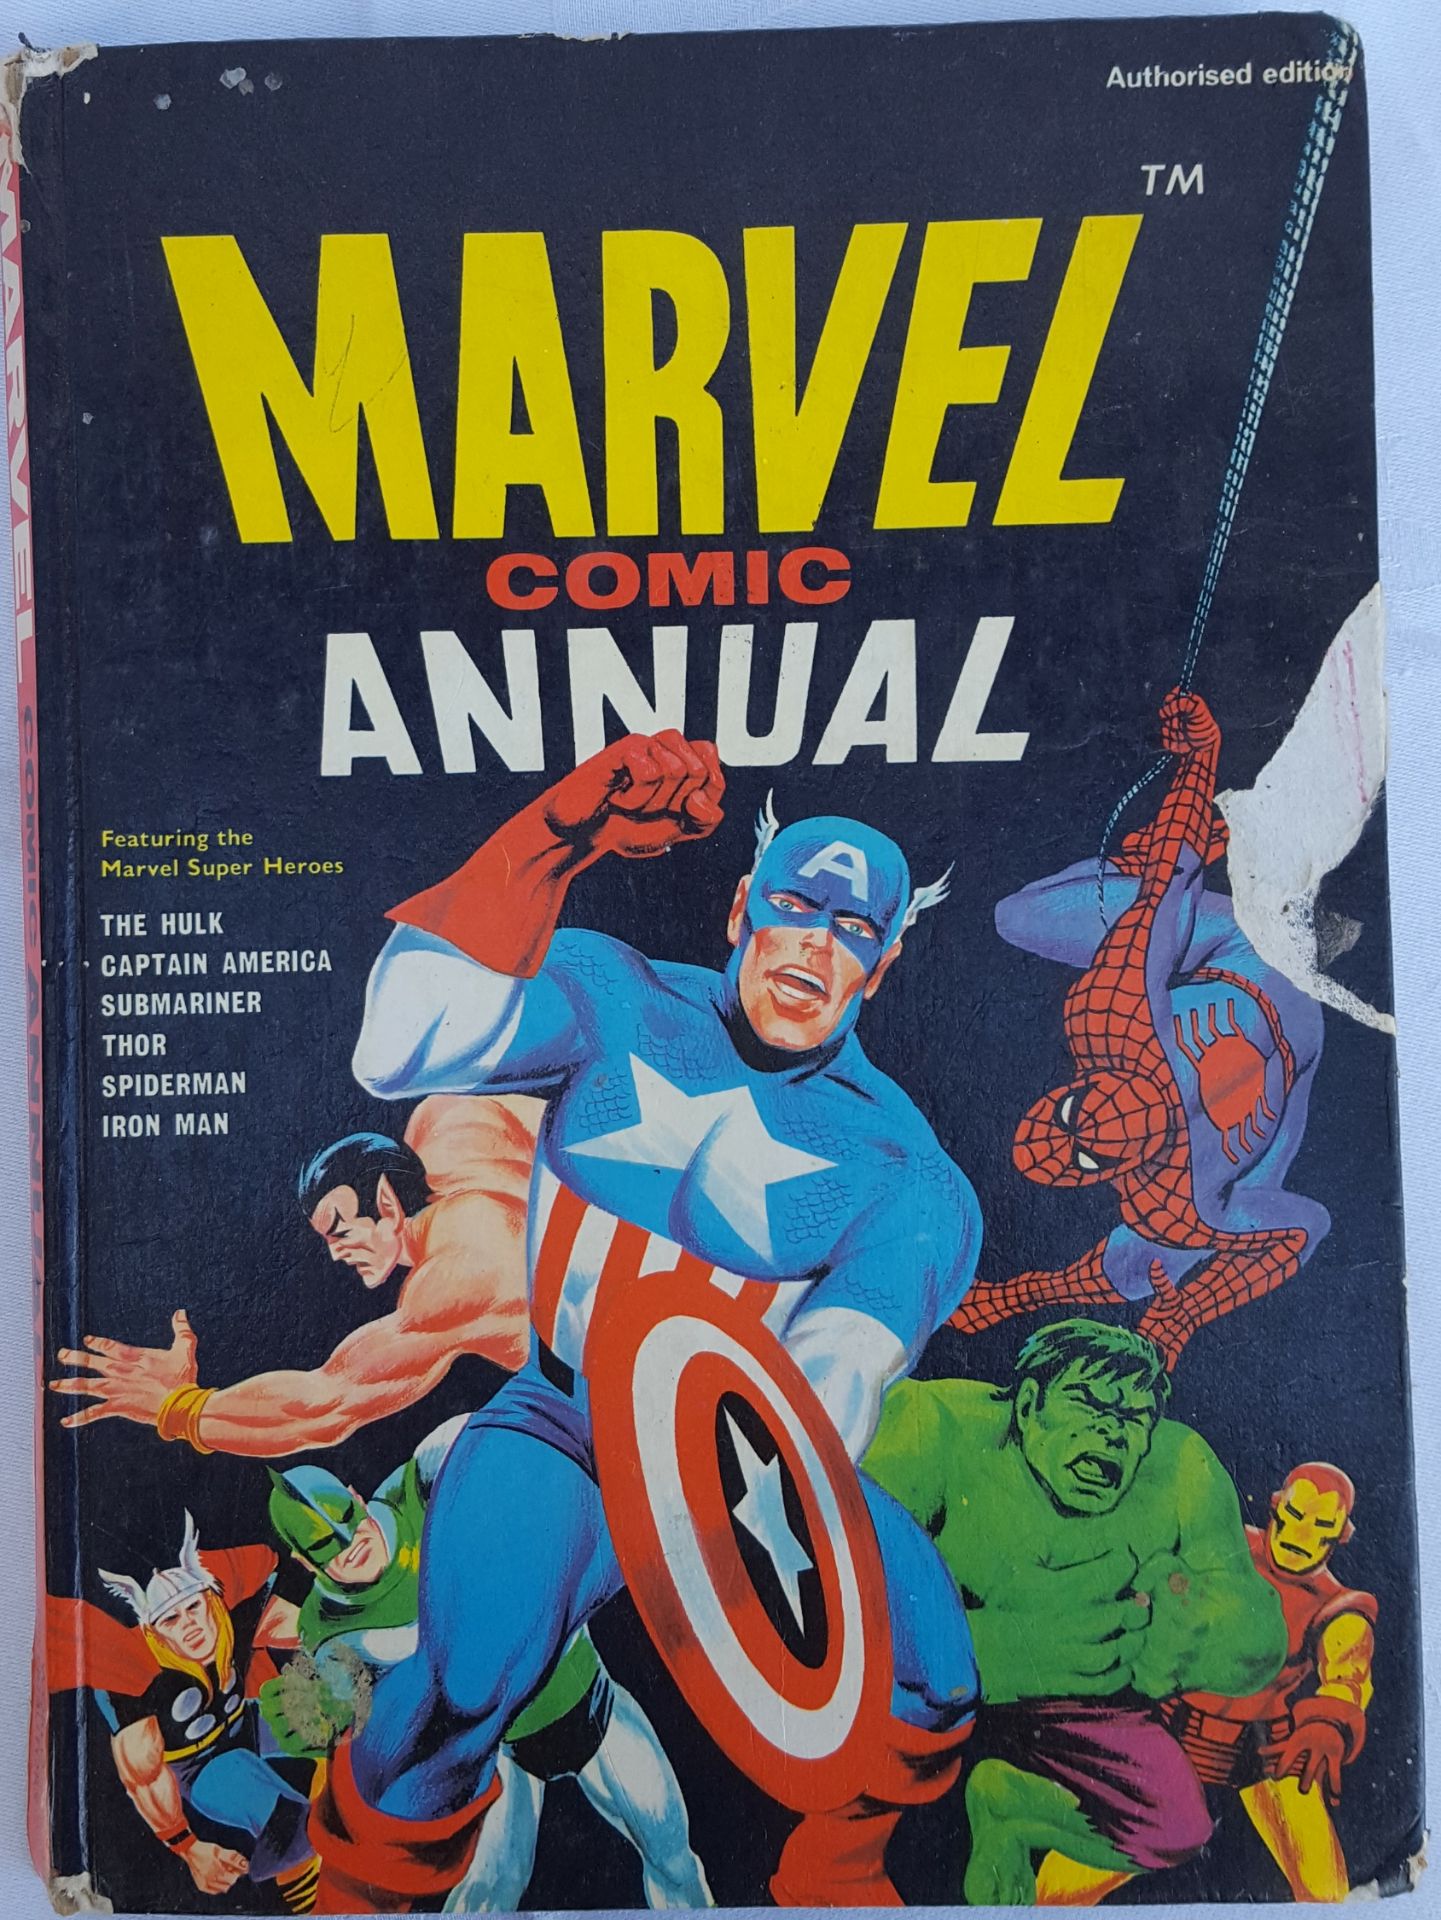 Vintage Retro 5 Assorted Comic Annuals Includes Marvel, Mattell & Walt Disney - Image 2 of 6